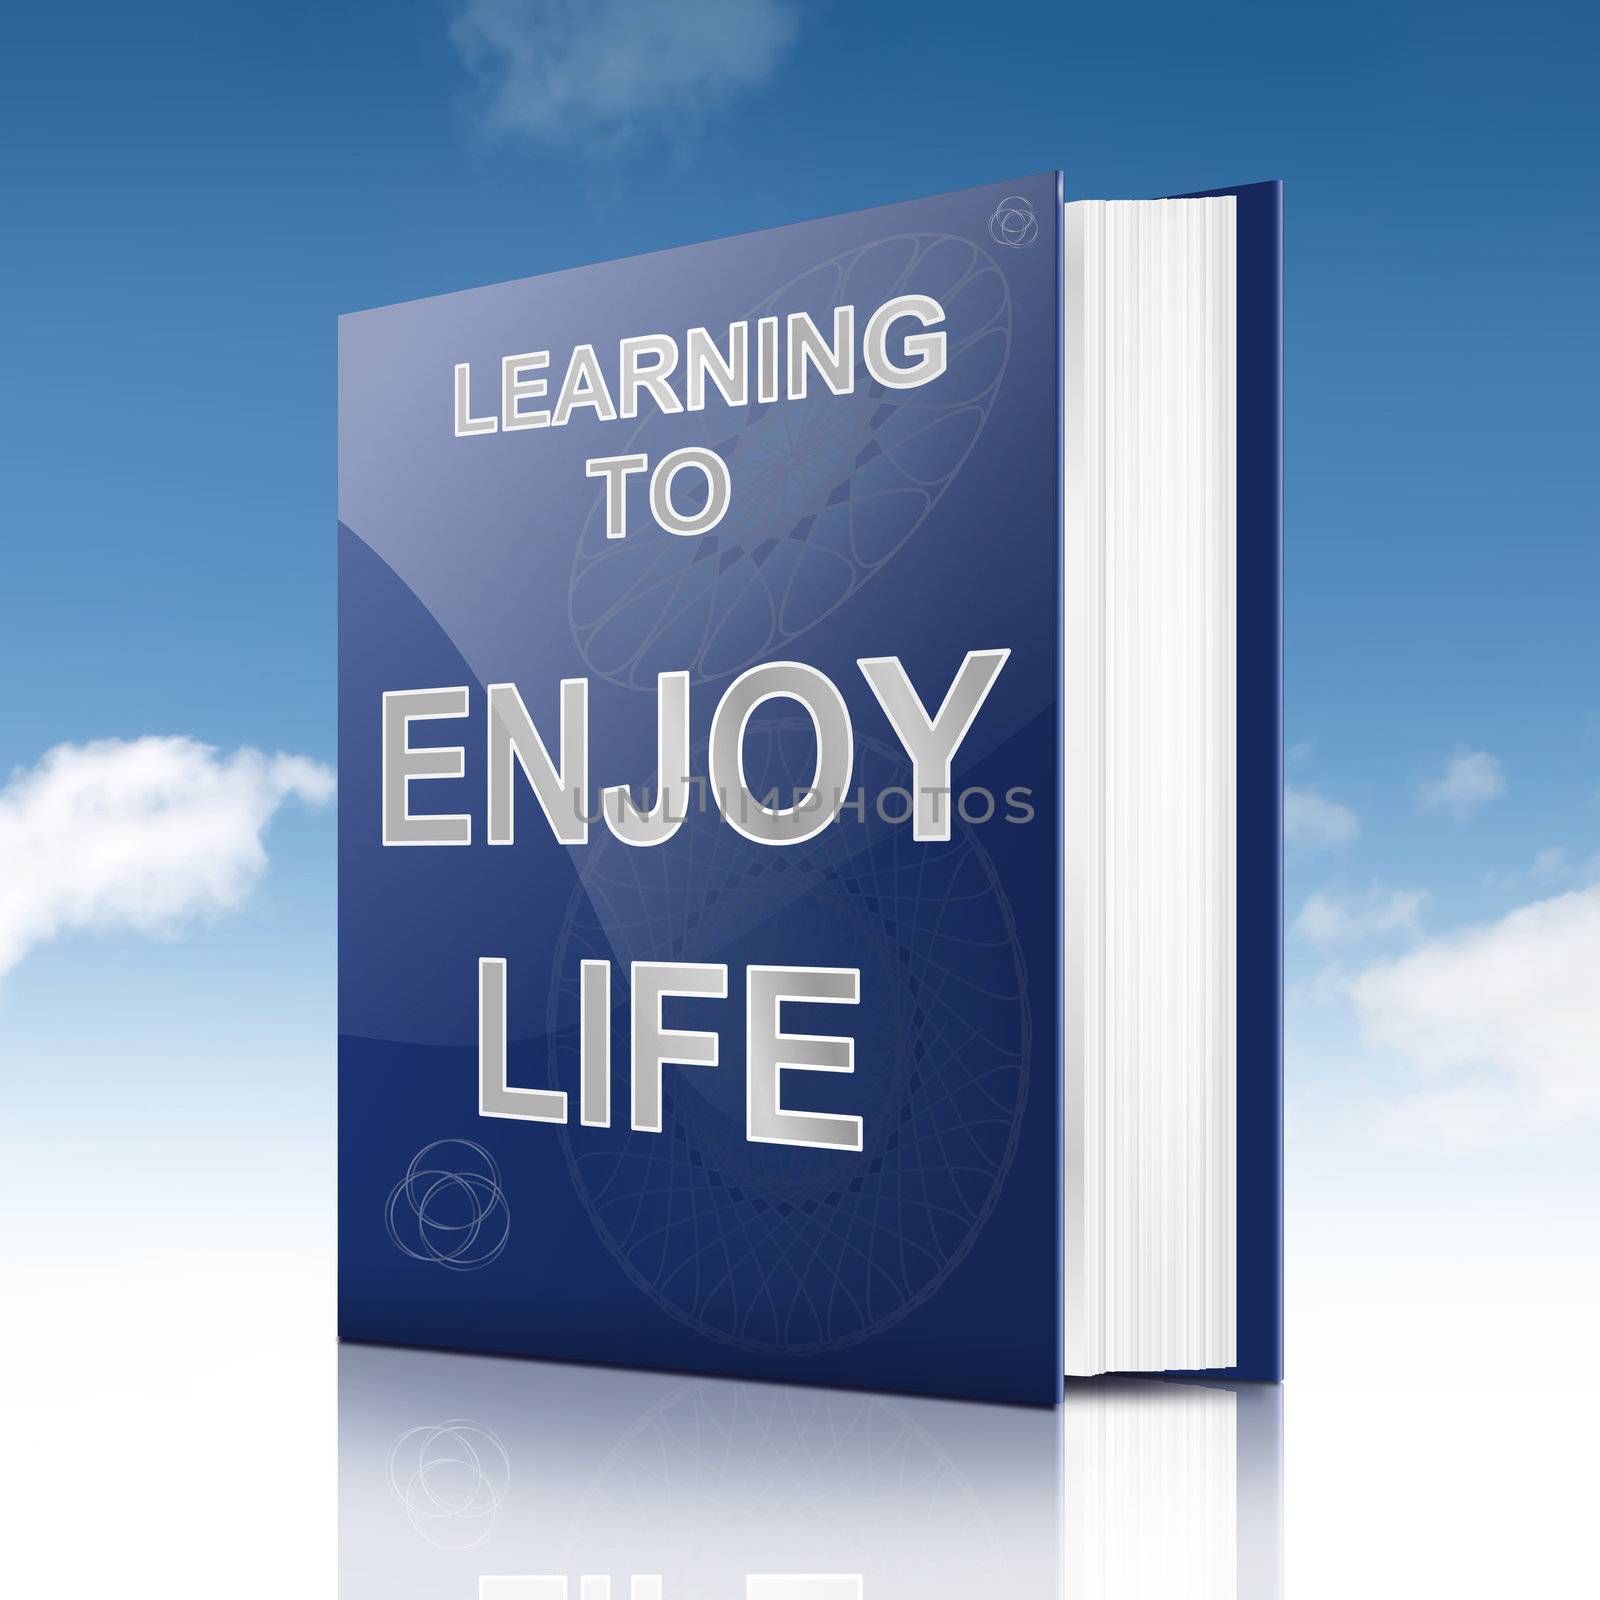 Enjoying life concept. by 72soul